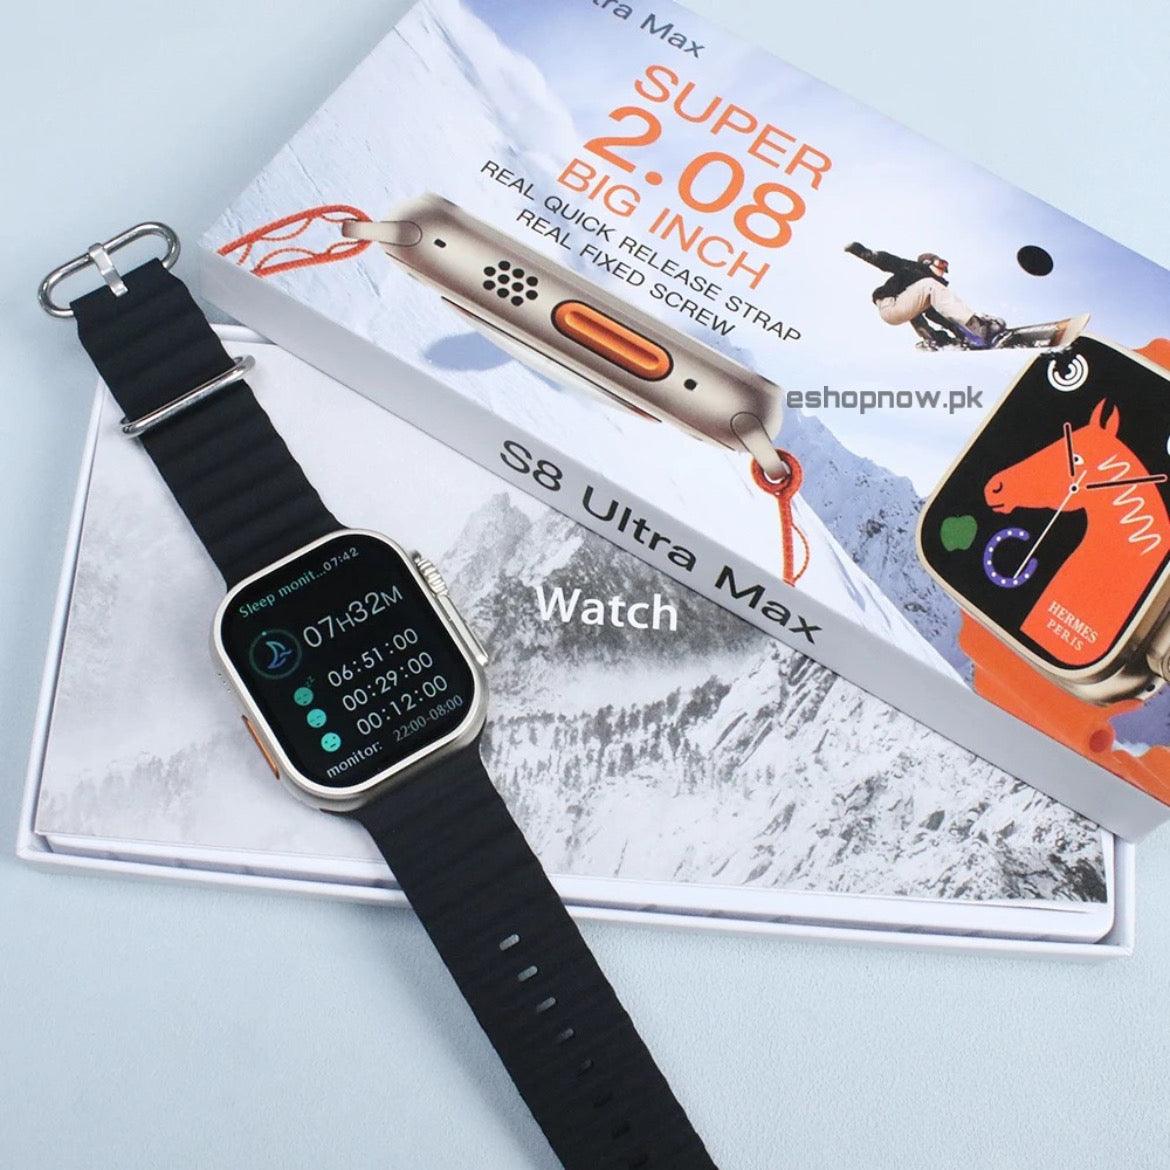 S8 U Max Smart Watch - eShop Now